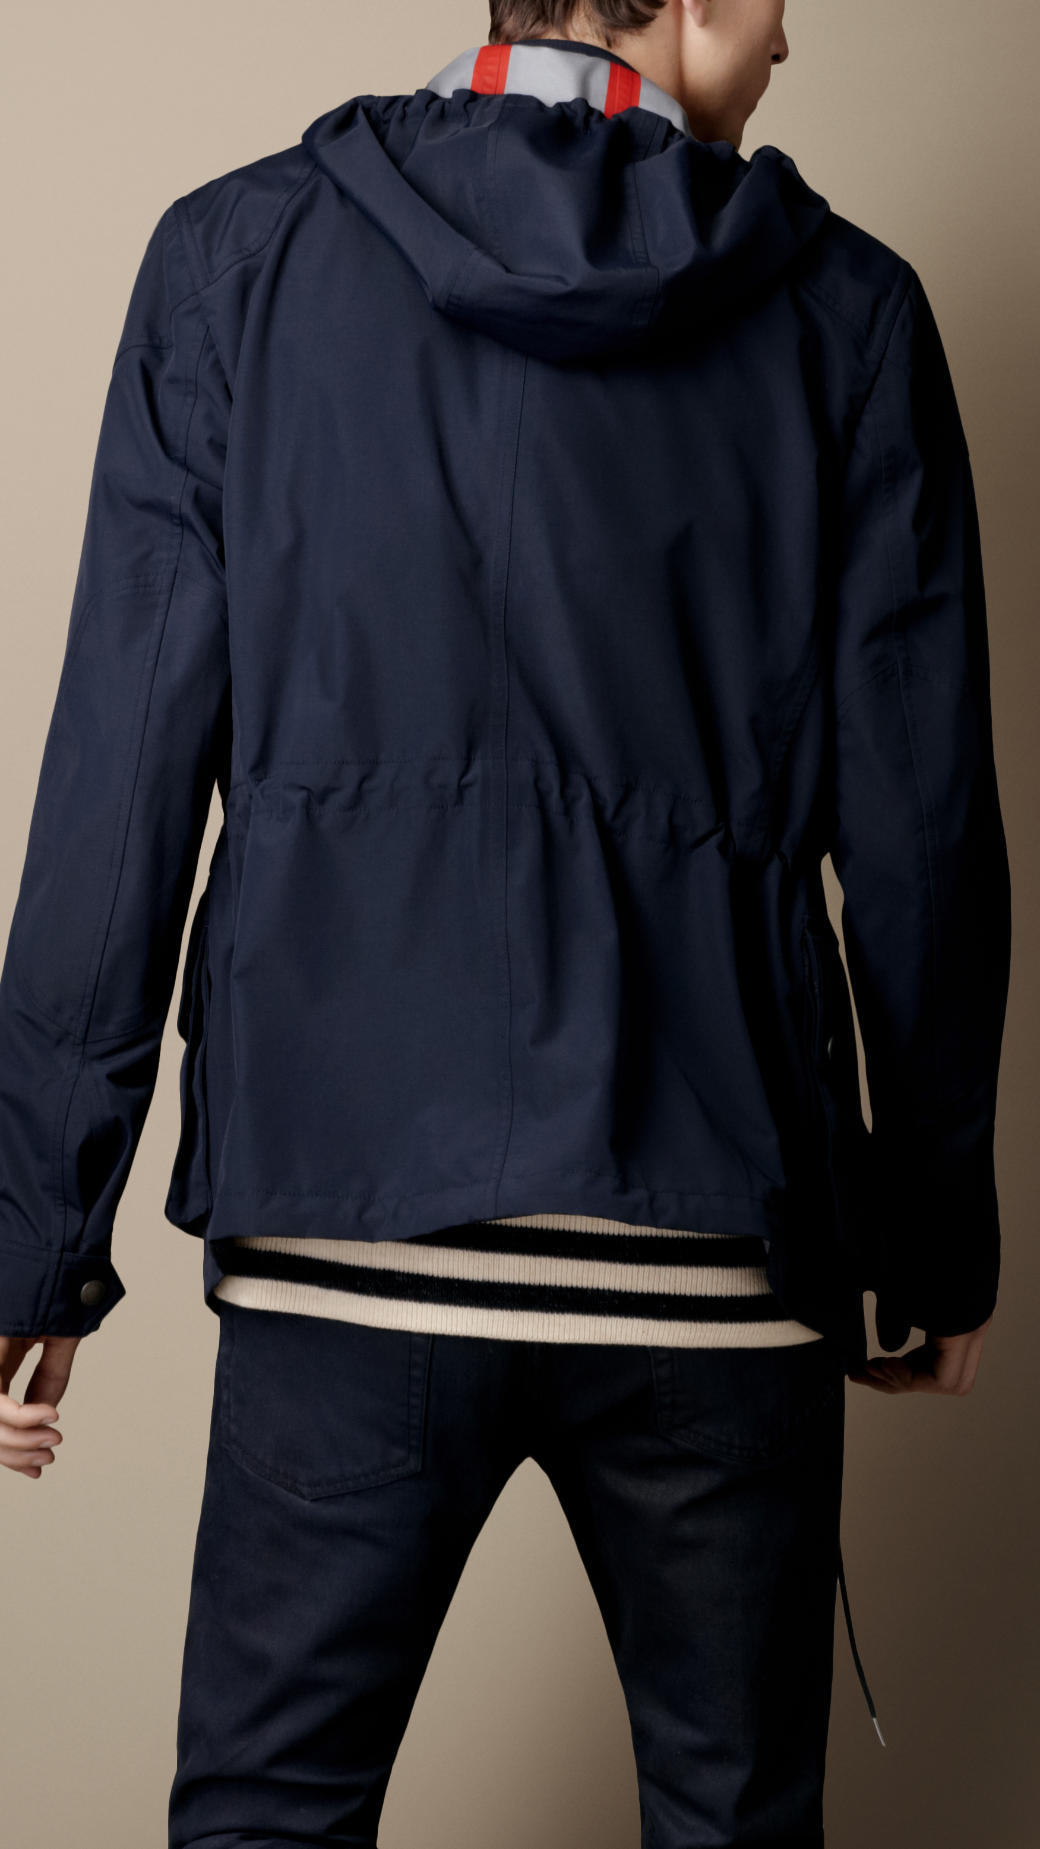 Lyst - Burberry Brit Hooded Field Jacket in Blue for Men